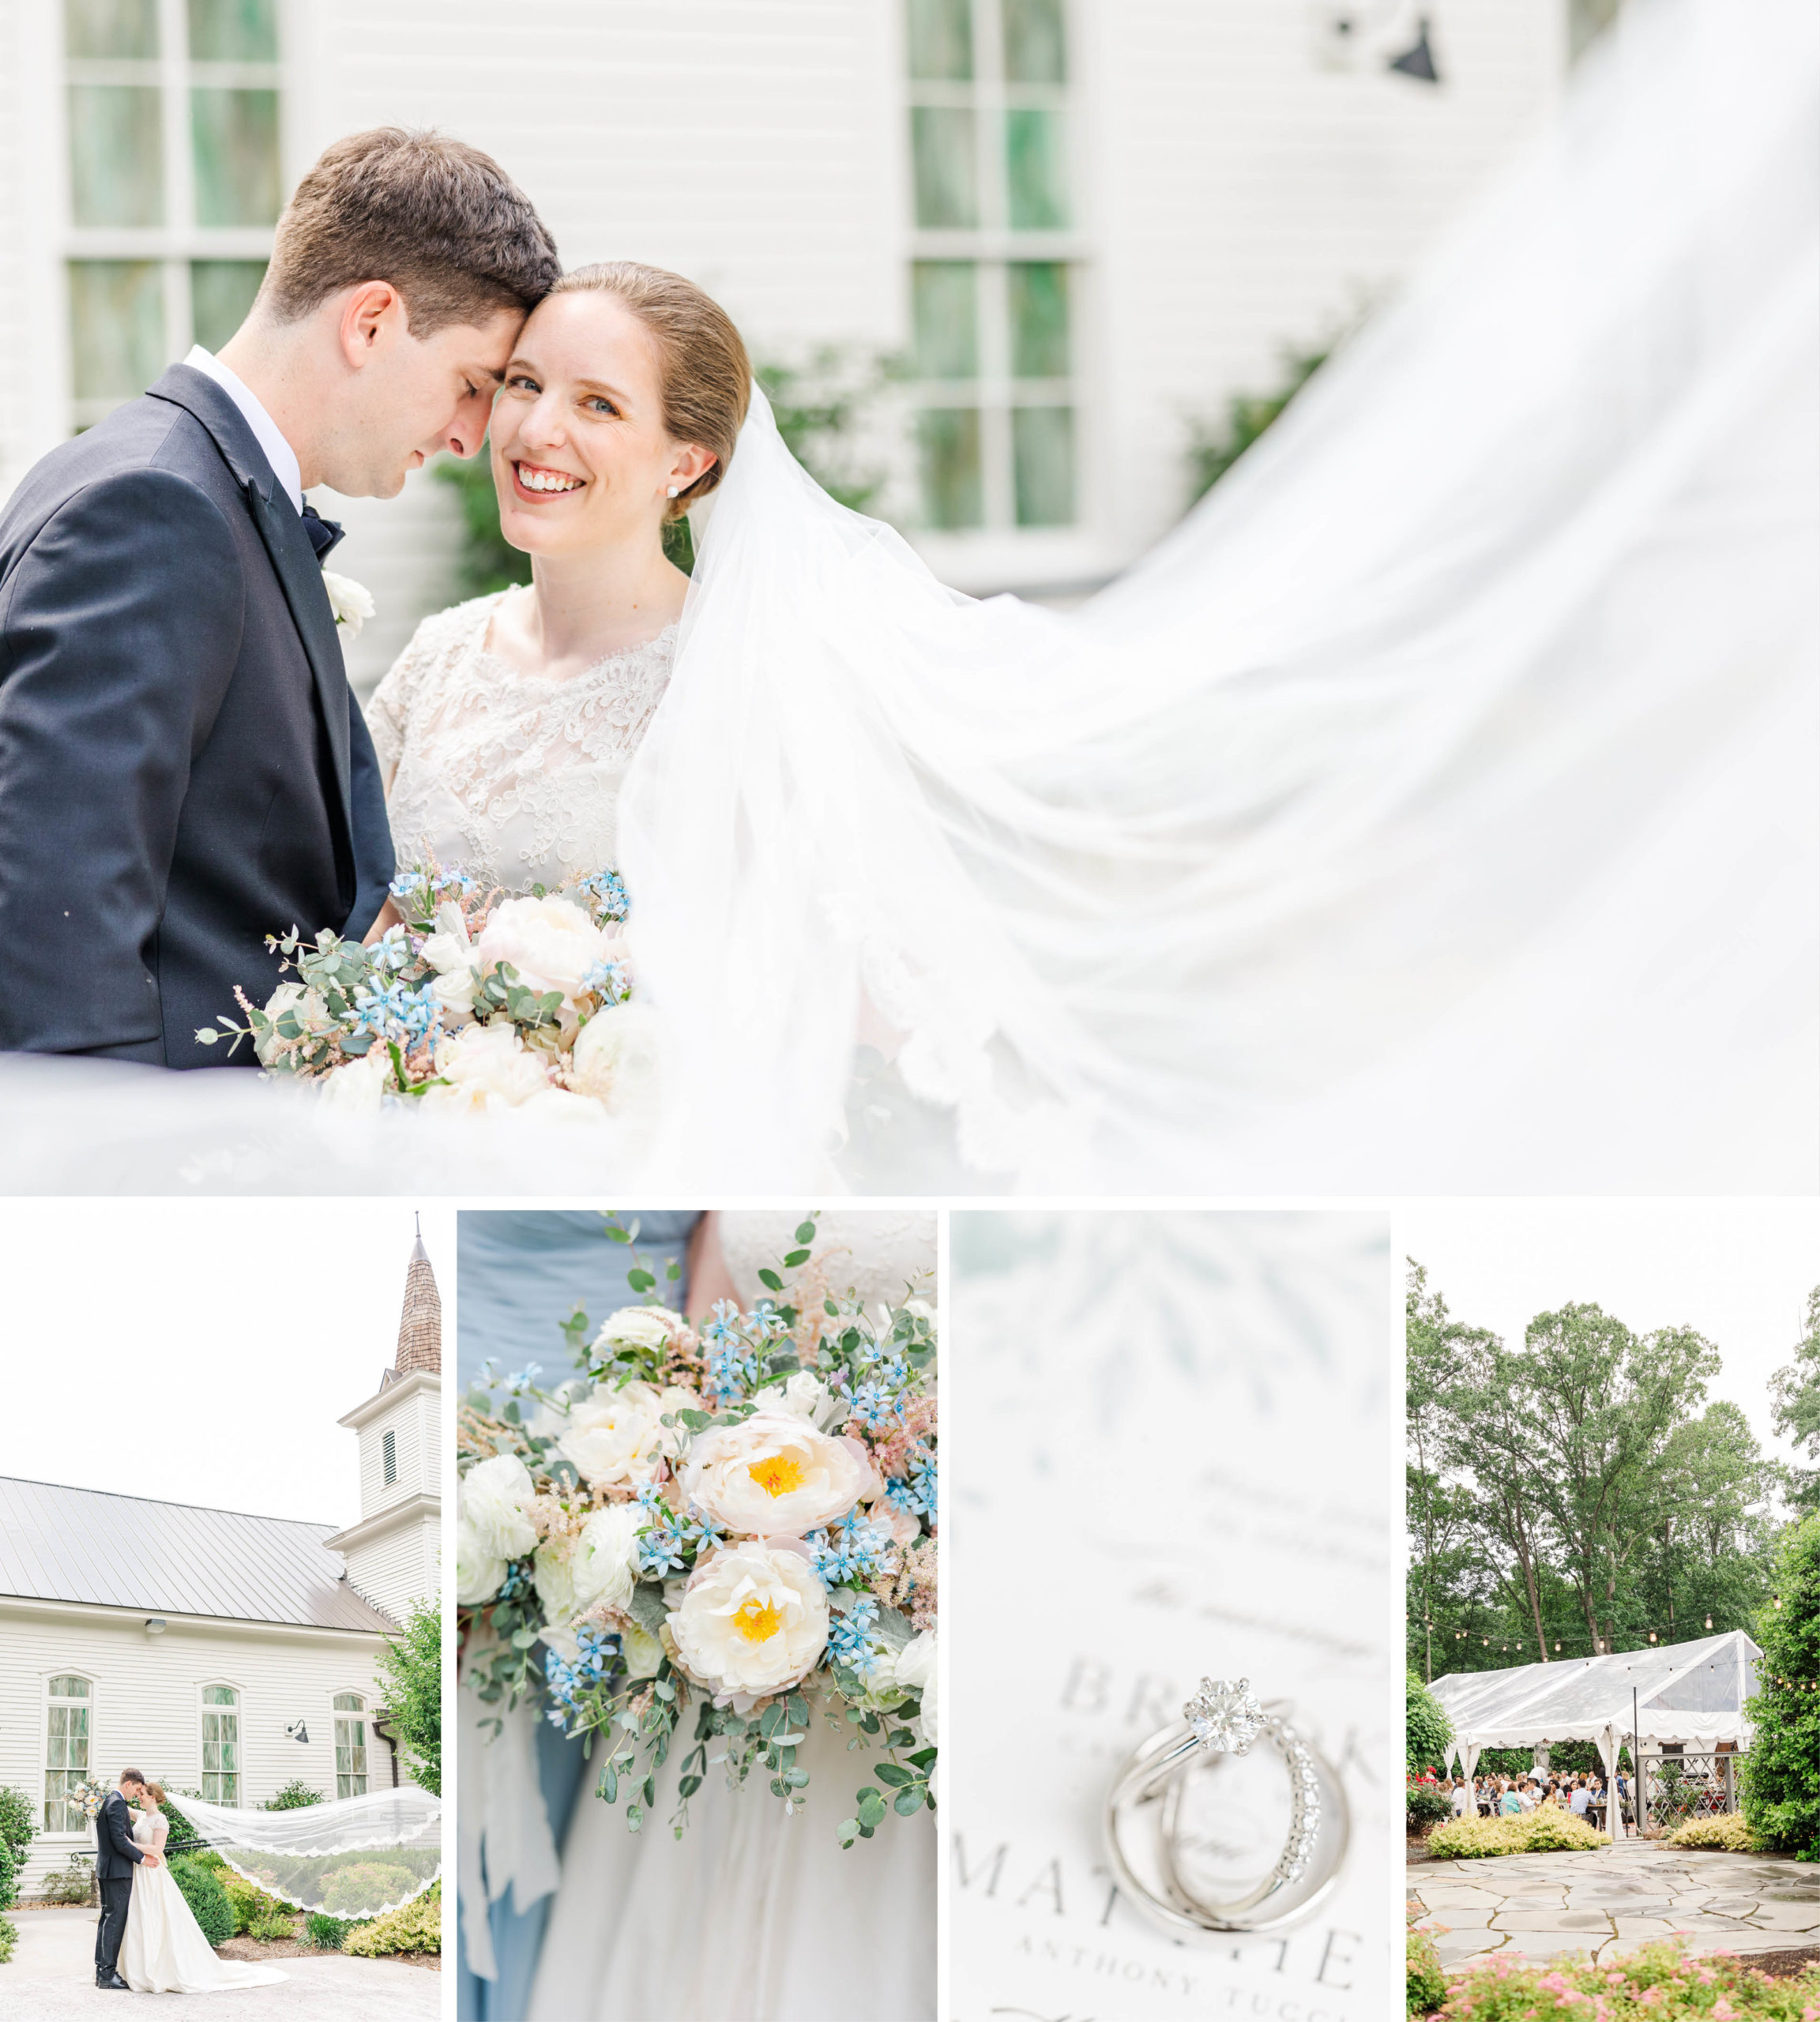 Matt + Brooke – Virginia Wedding Photographer